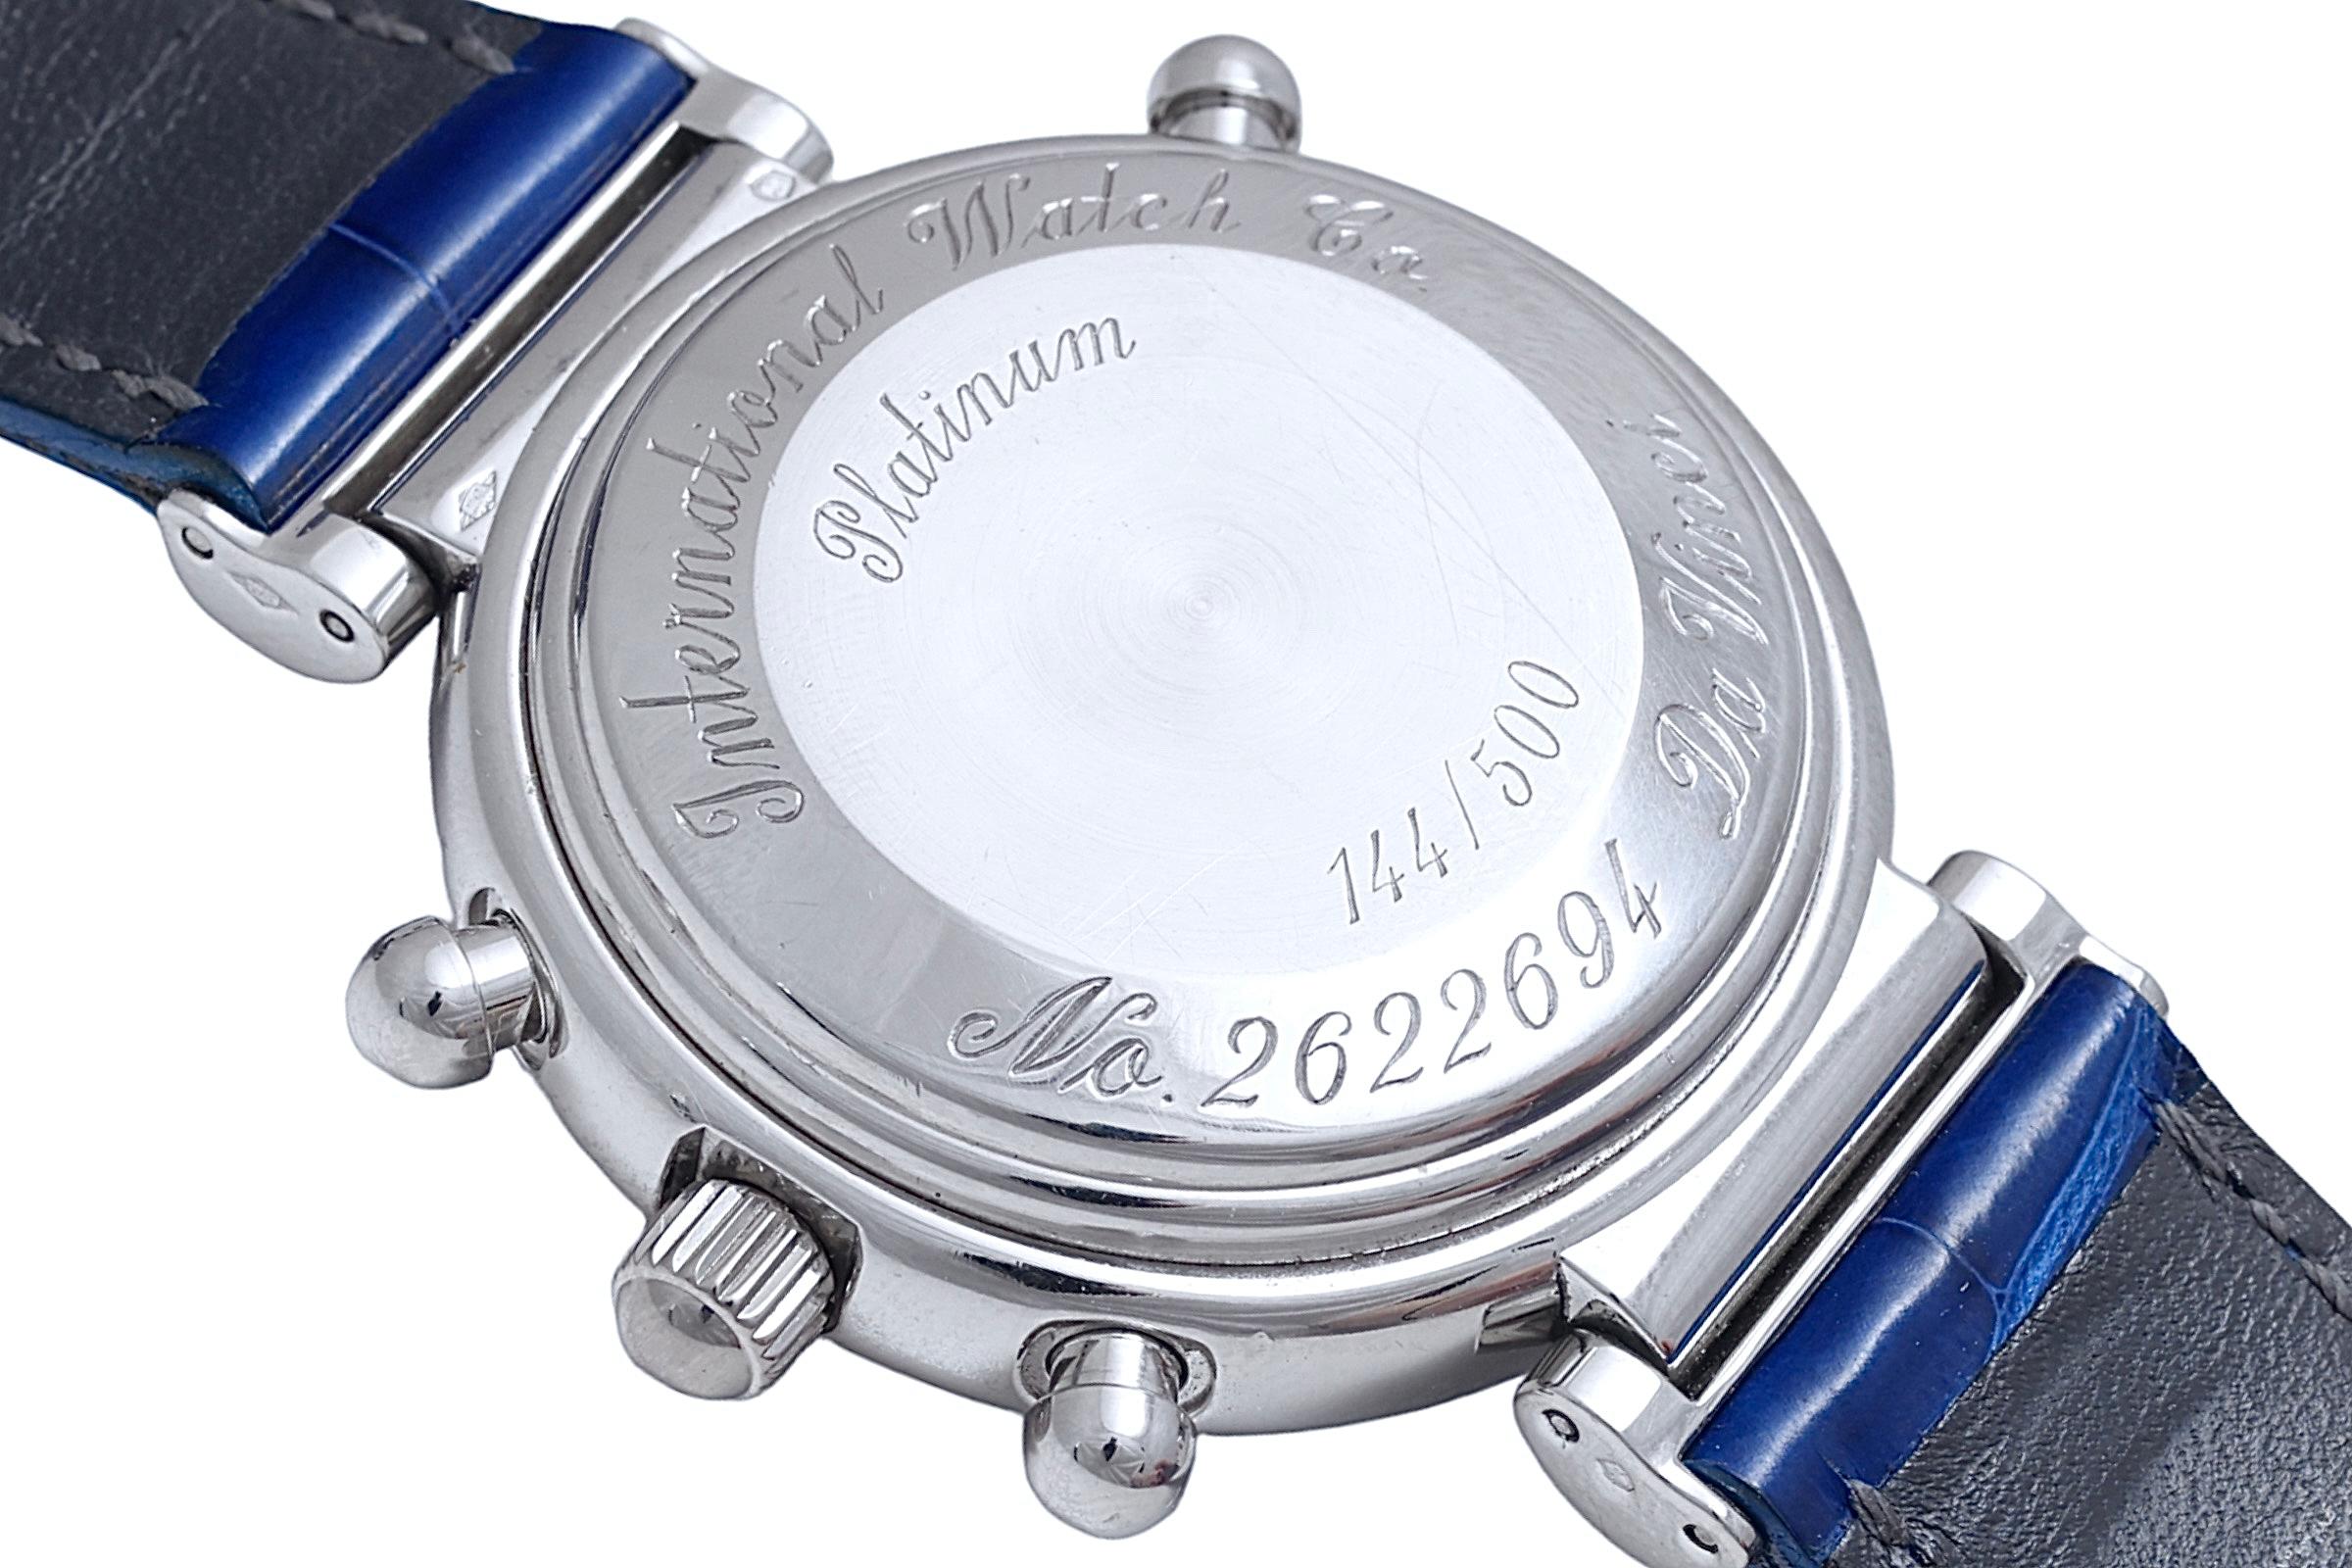 Platinum IWC Perpetual Calendar Split Second Chronograph Limited Wrist Watch3751 For Sale 4